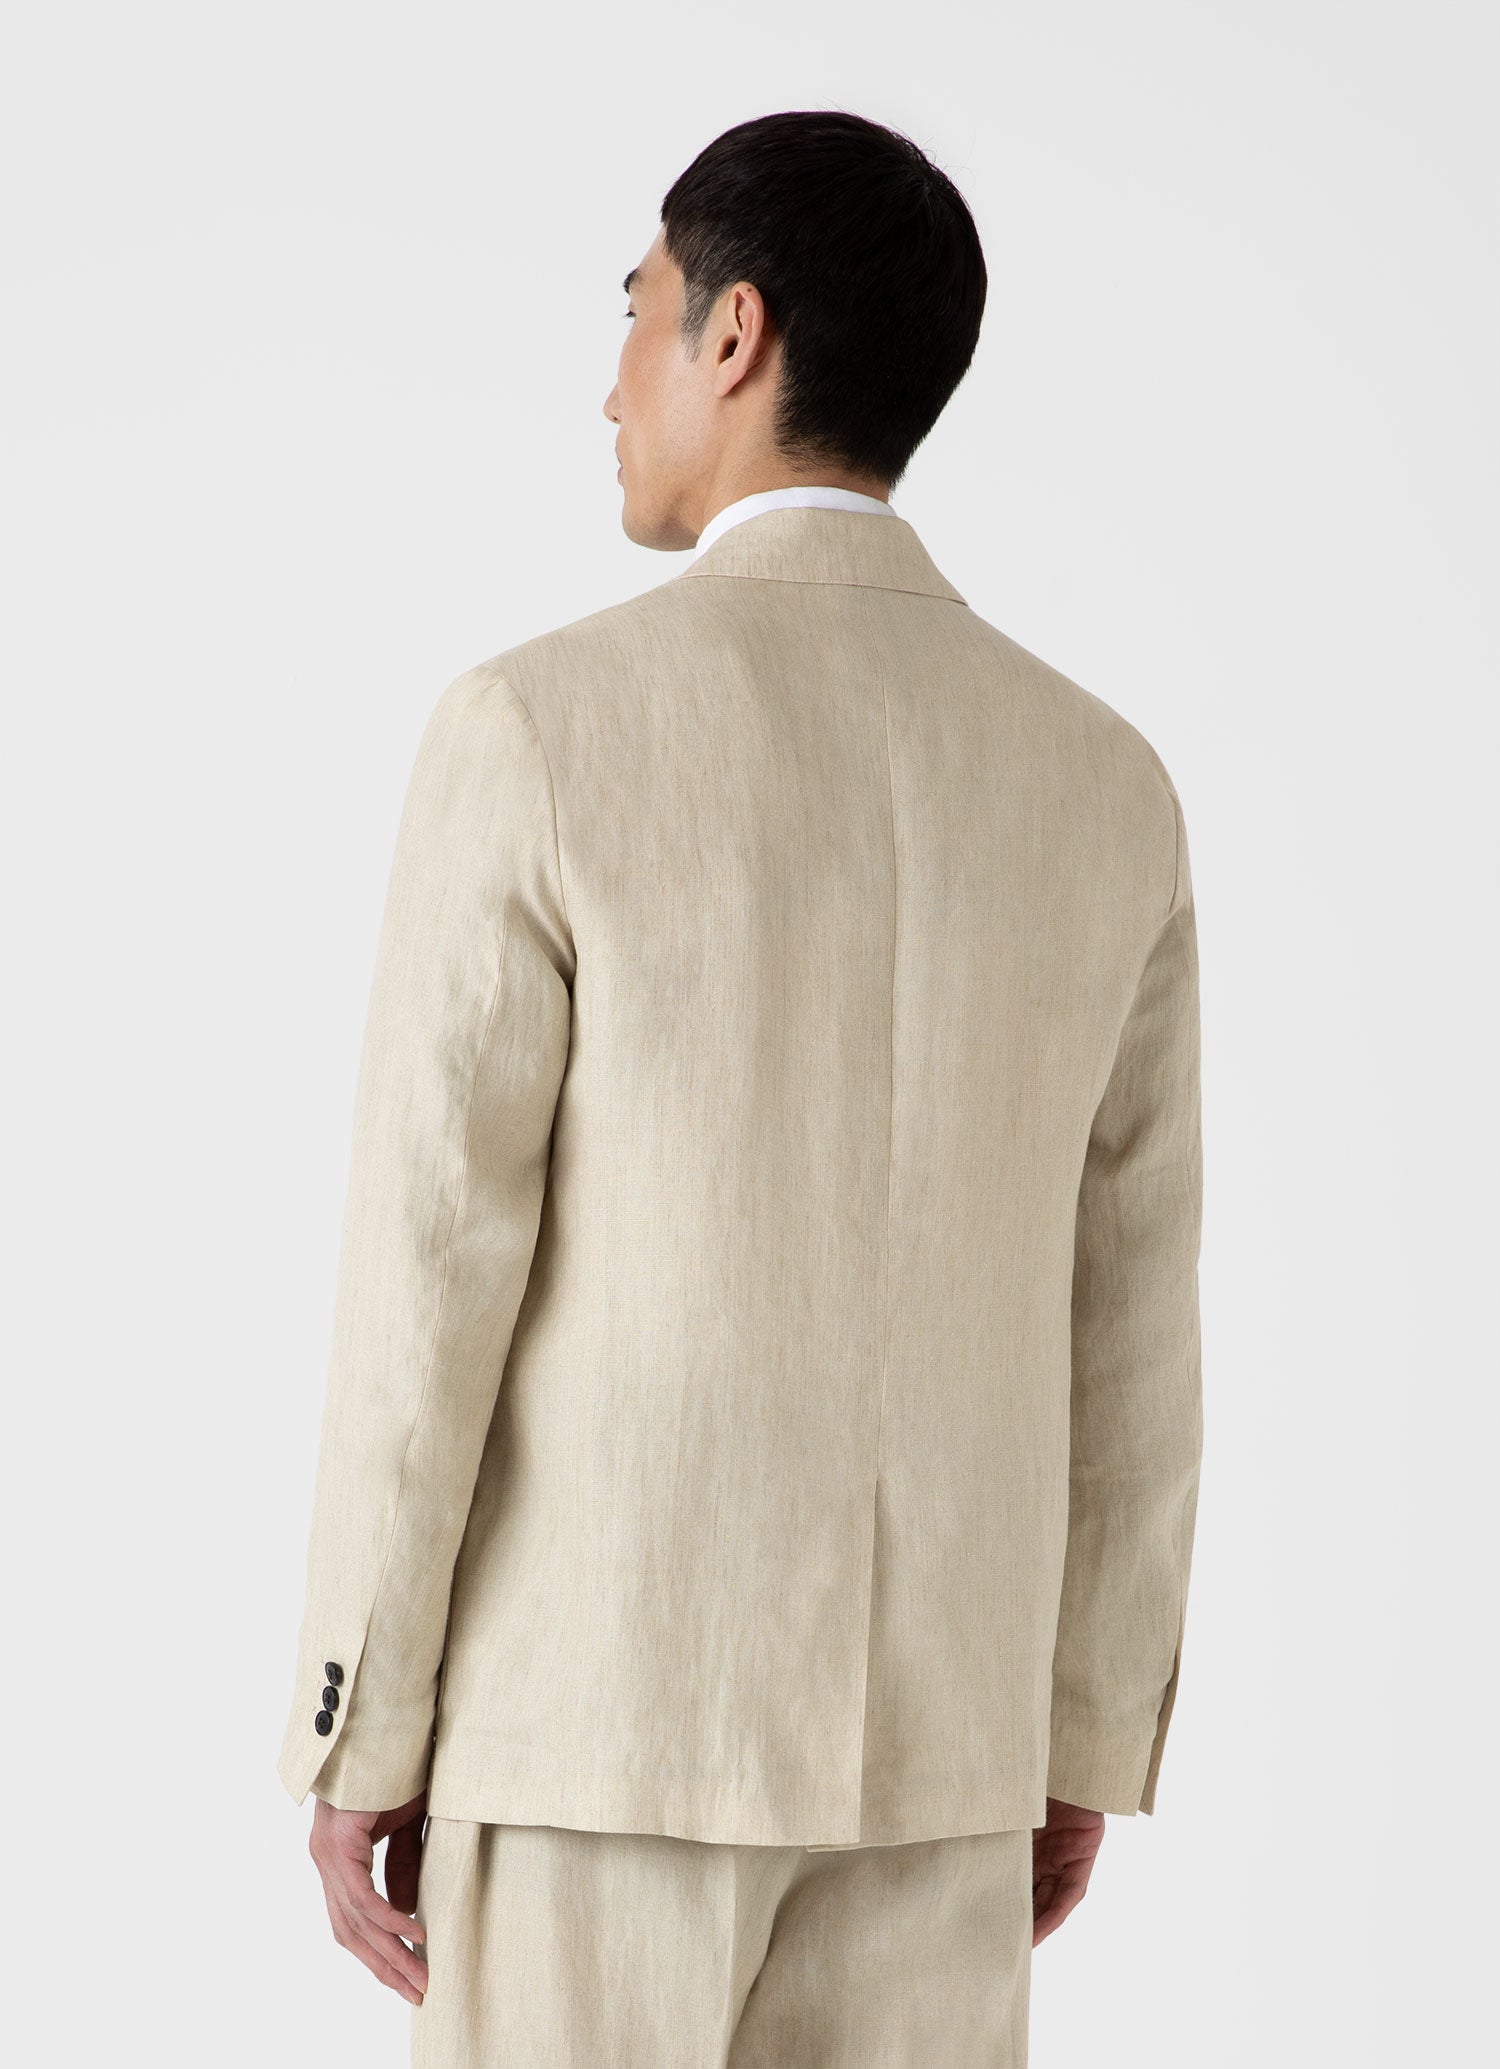 Men's Linen Two-Piece Suit in Light Sand